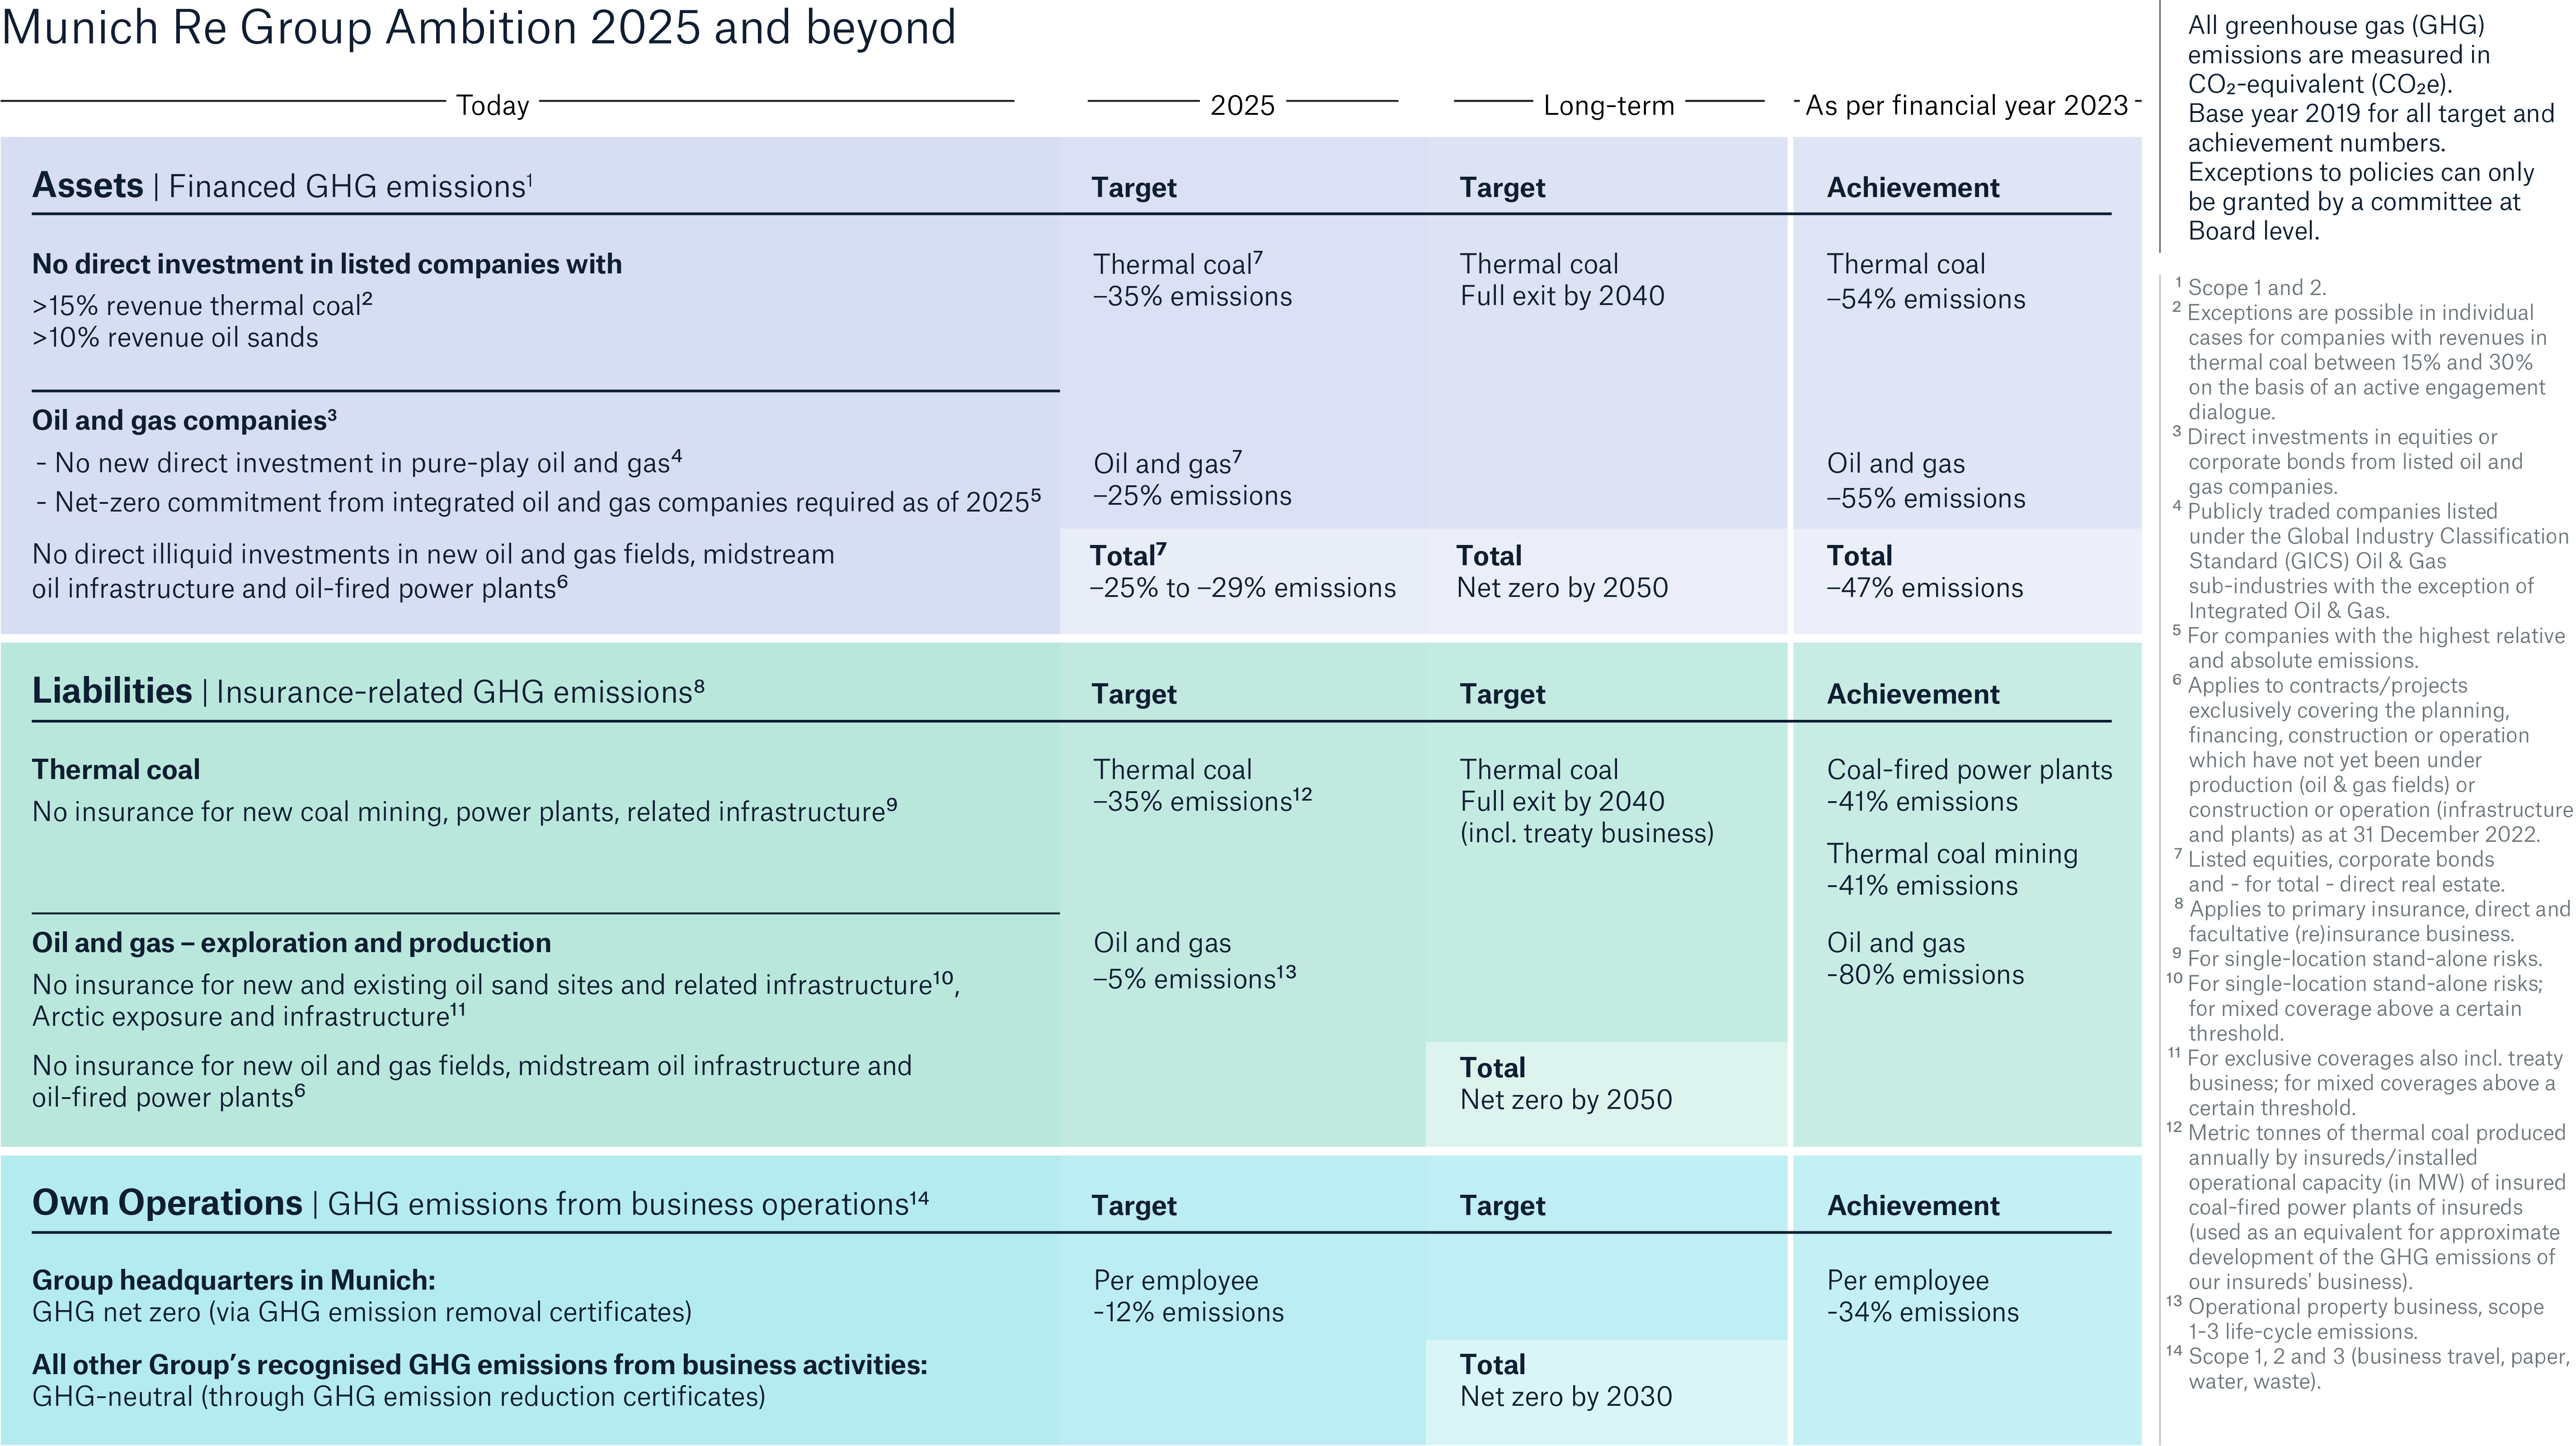 Munich Re Group Ambition 2025 and Beyond